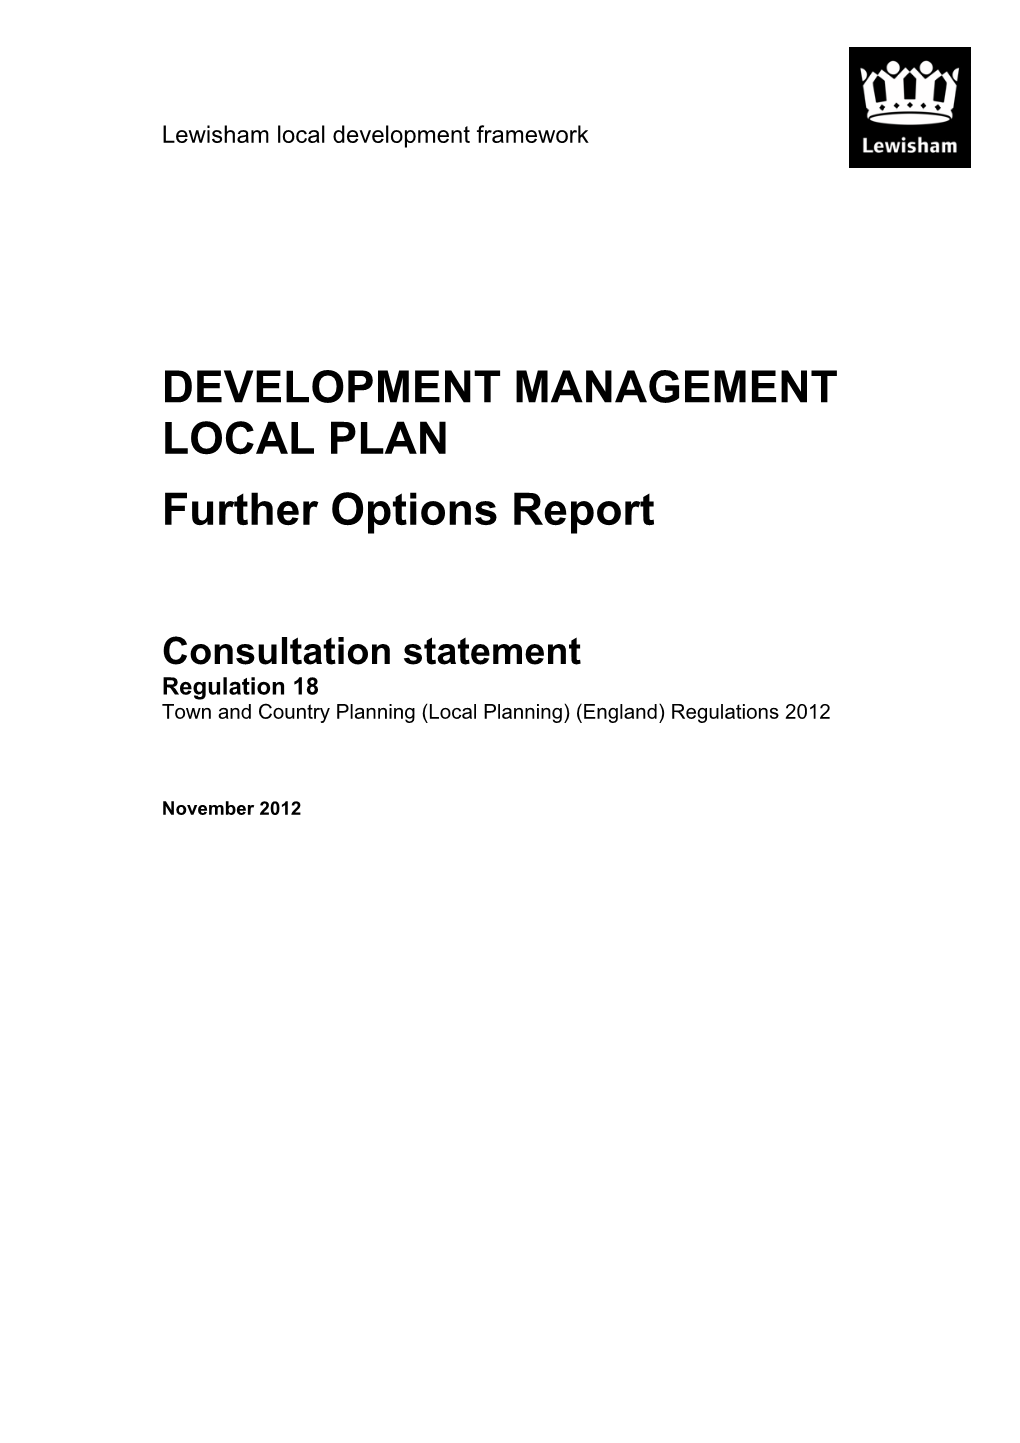 DEVELOPMENT MANAGEMENT LOCAL PLAN Further Options Report